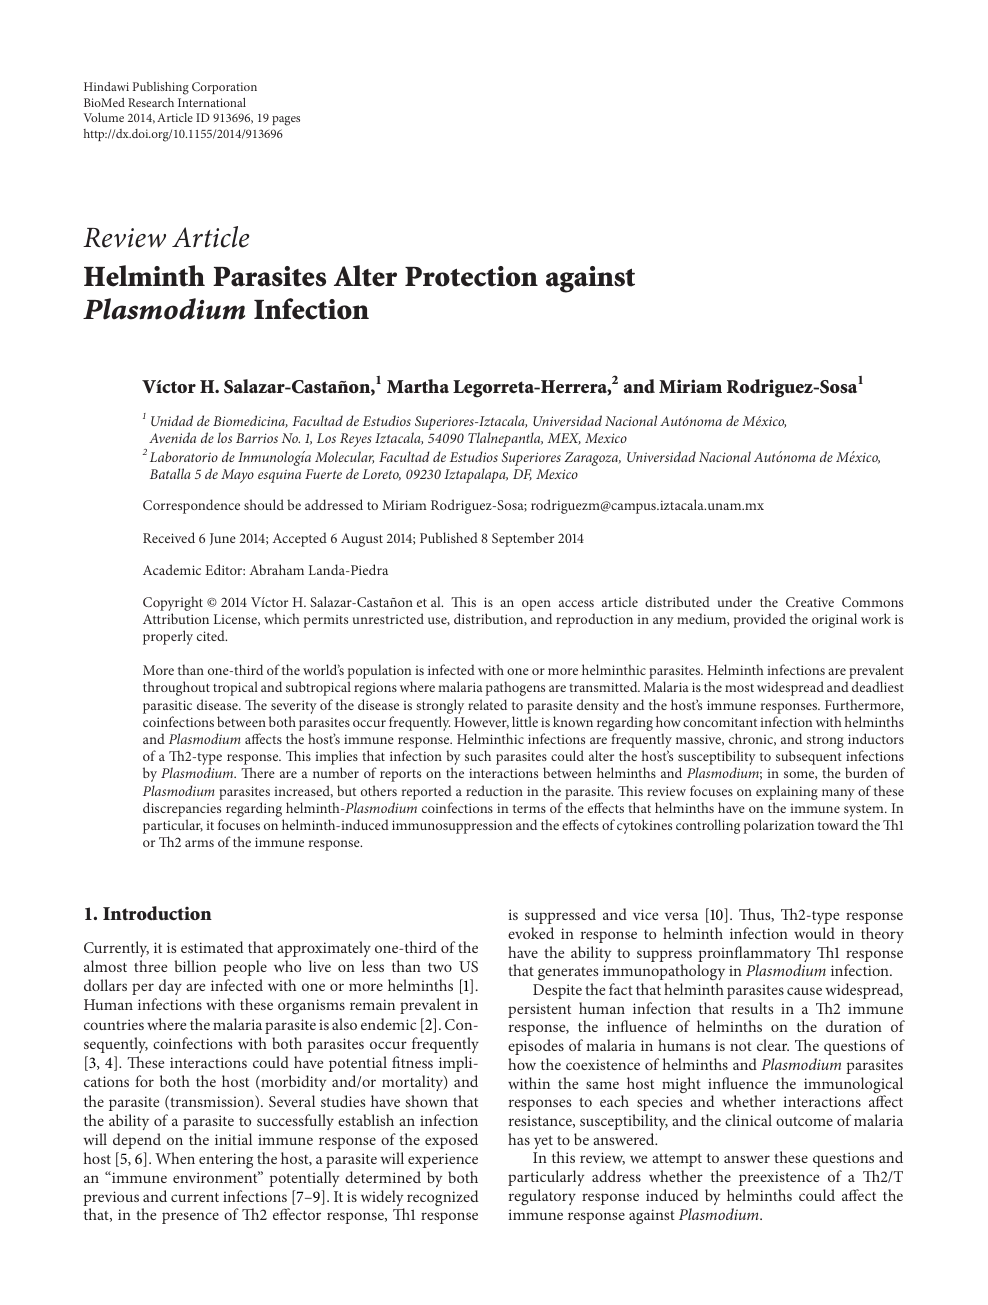 Helminth Parasites Alter Protection Against Plasmodium